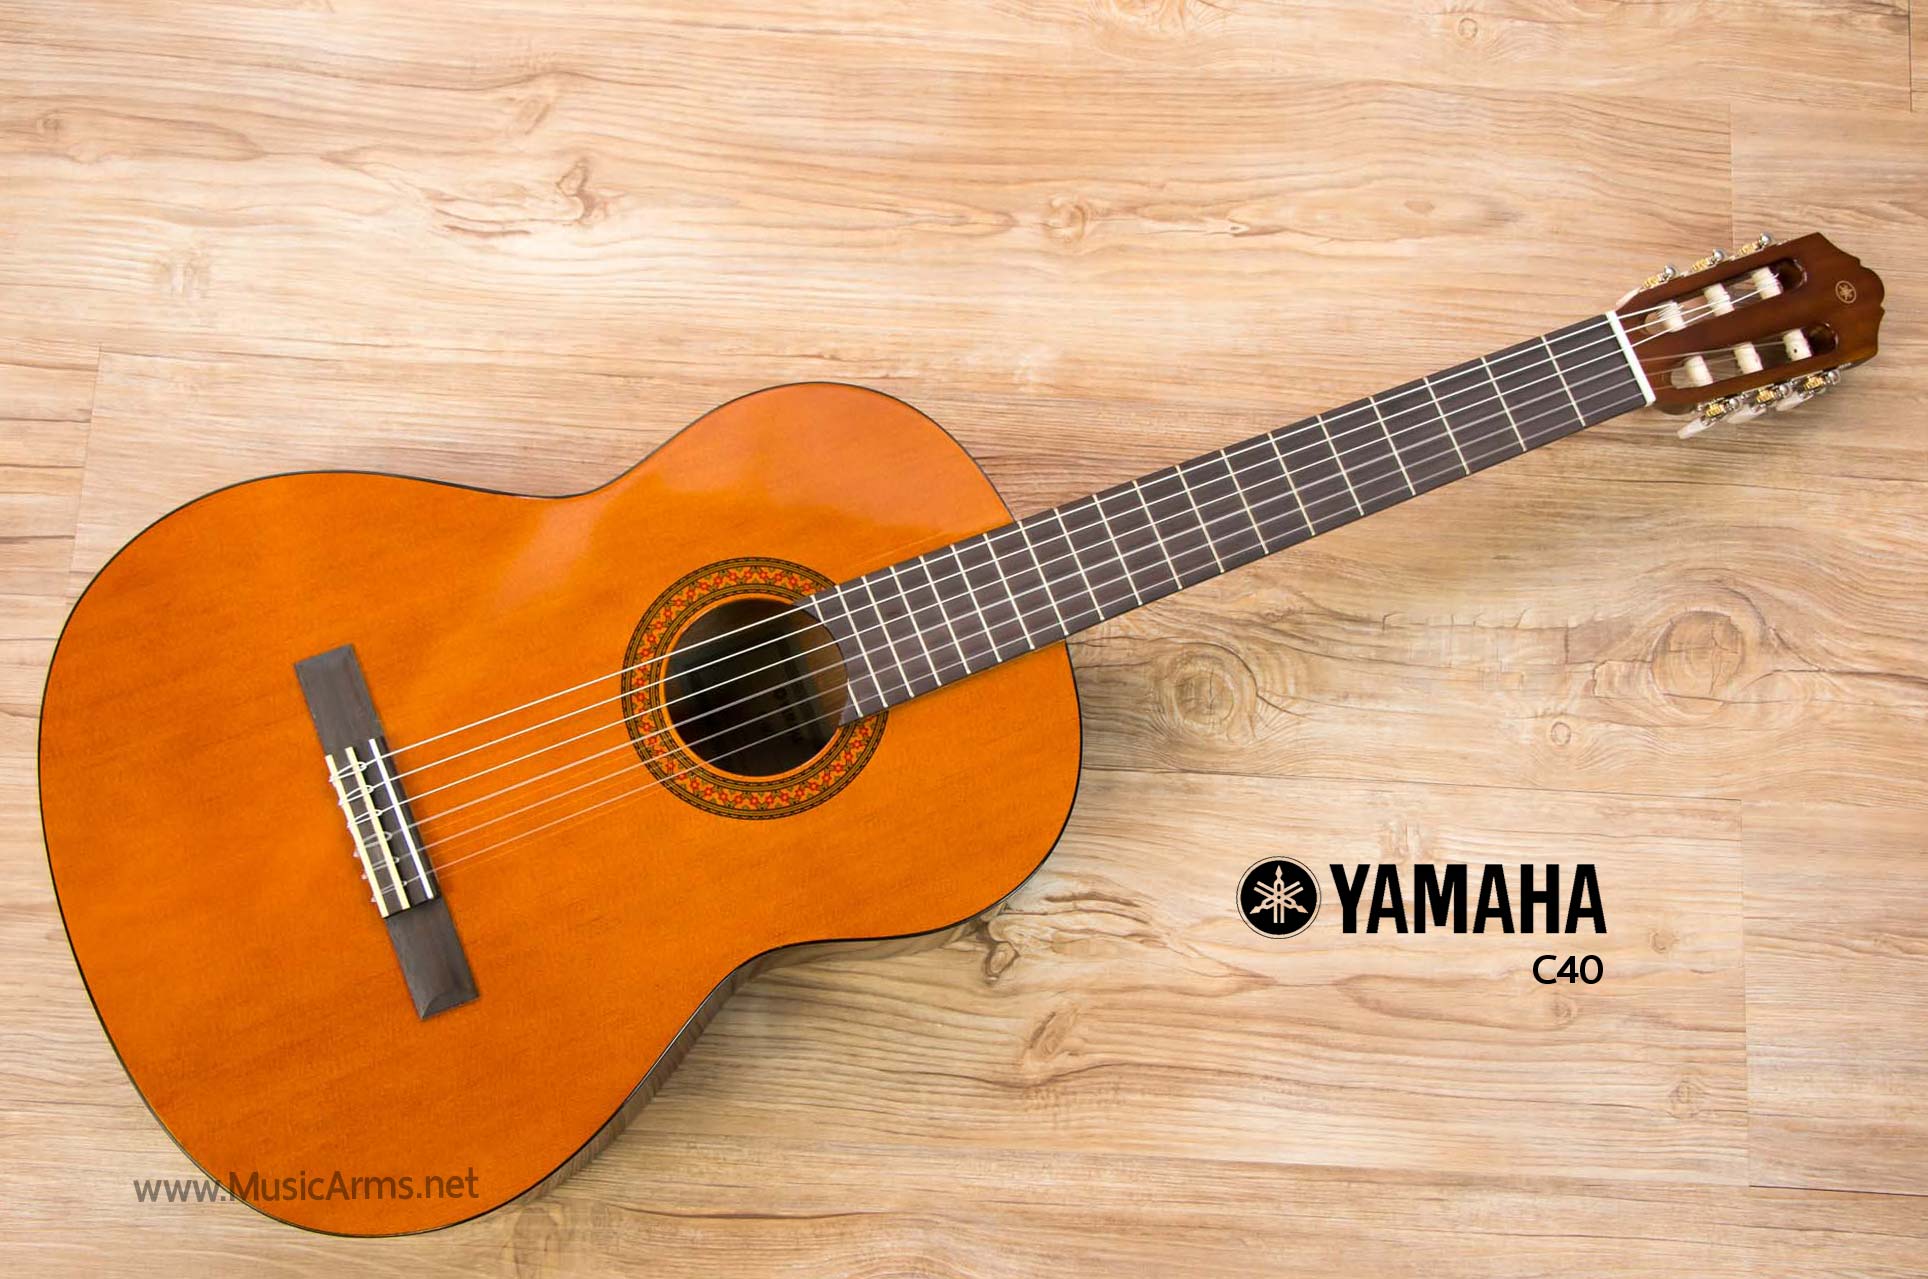 Yamaha C40 กีตาร์คลาสสิก Music Arms ศูนย์รวมเครื่องดนตรี ตั้งแต่เริ่มต้น ถึงมืออาชีพ Music Arms